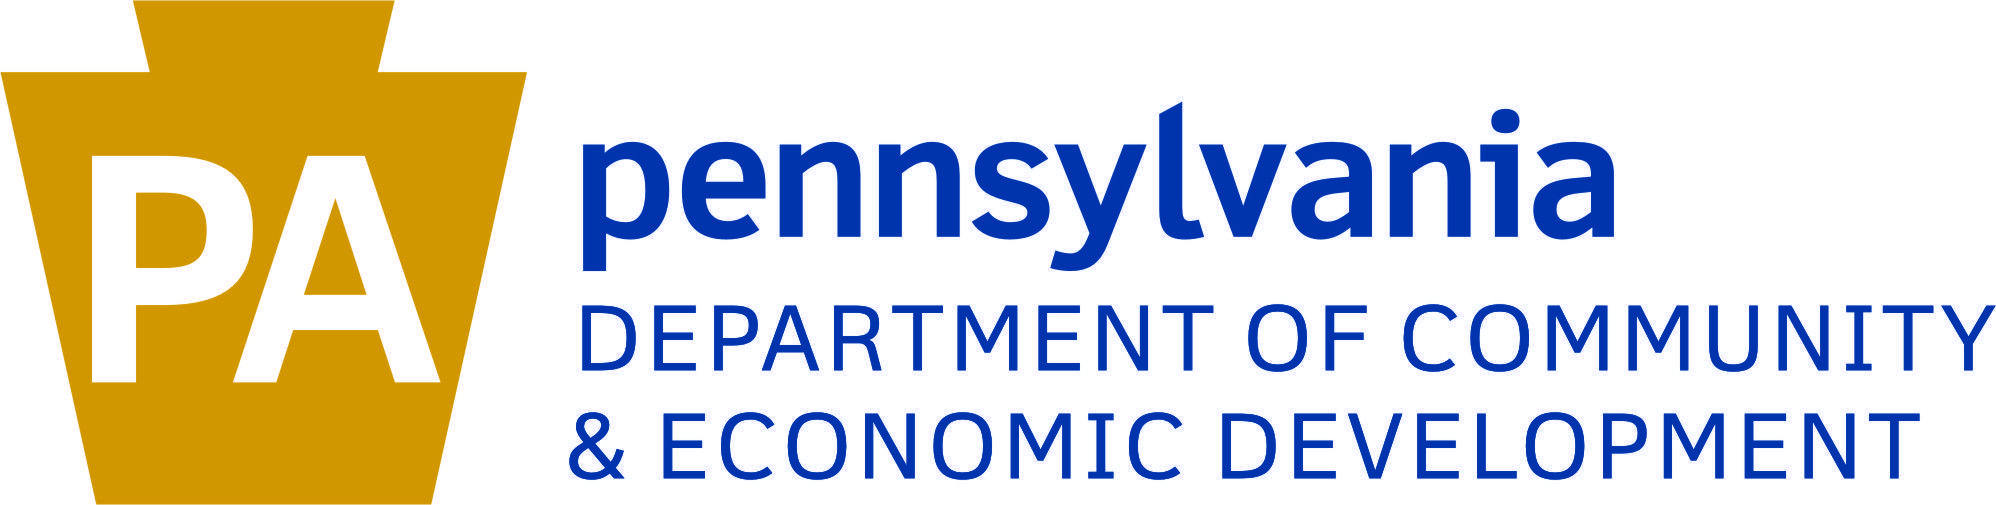 The Pennsylvania Logo - Logo Use Guidelines - PA Department of Community & Economic Development